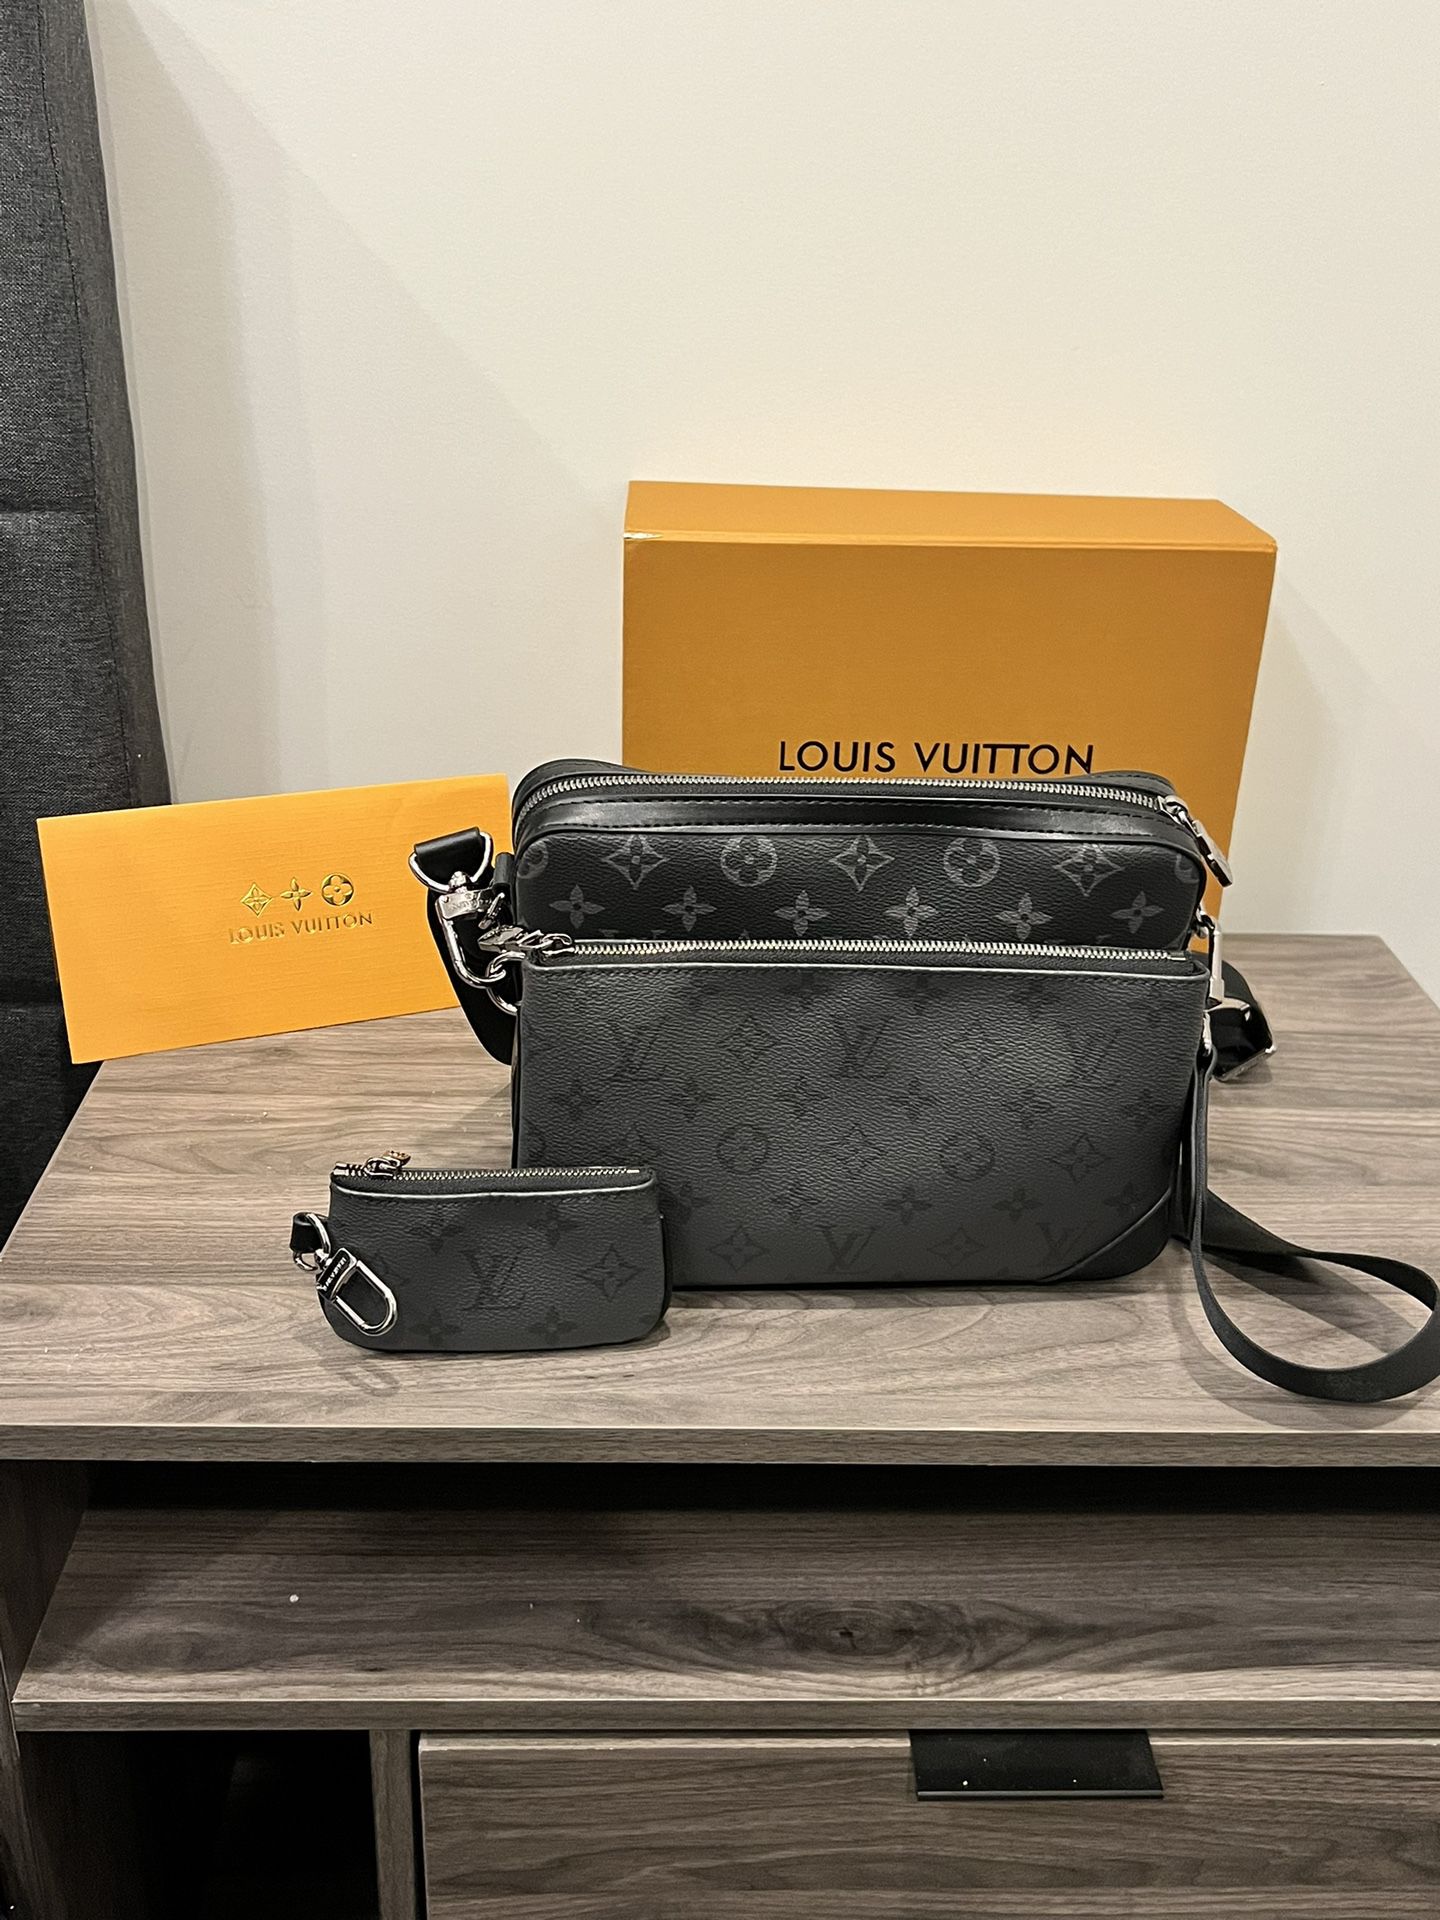 Louis Vuitton Grey And Black Monogram Print Crossbody Bag.